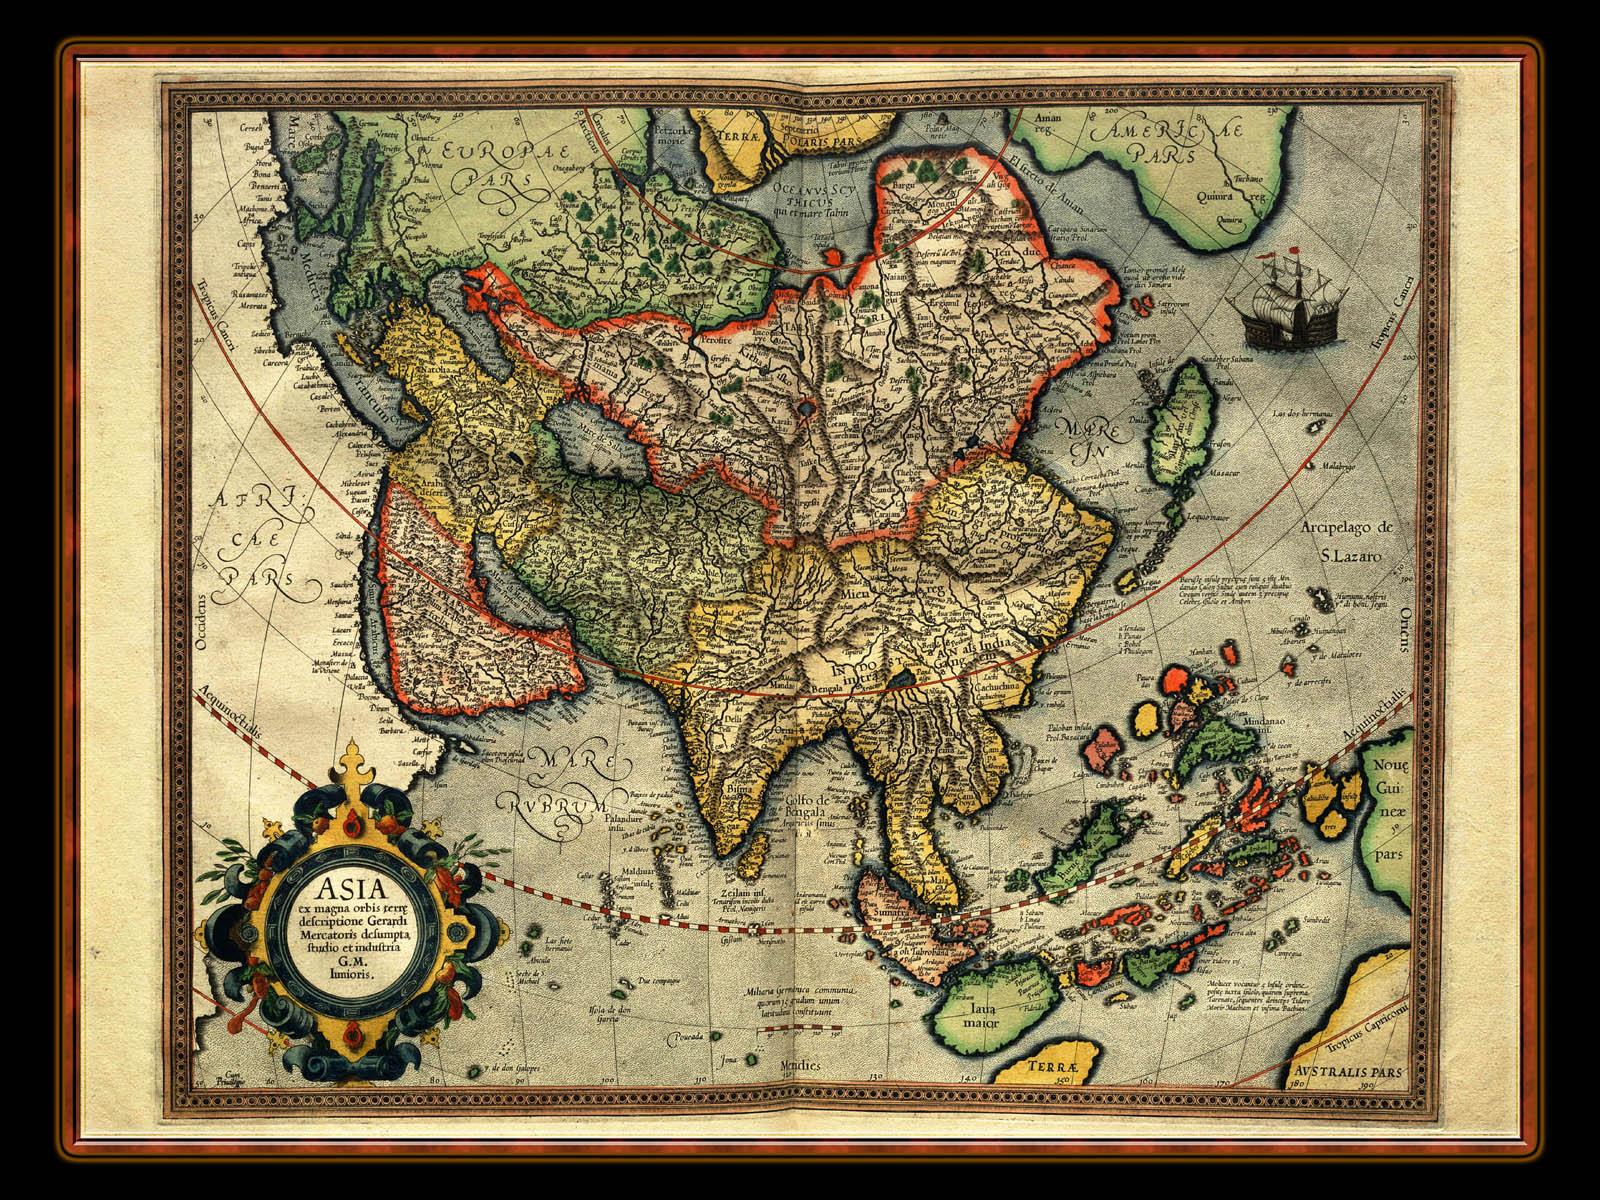 "Gerhard Mercator 1595 World Atlas - Cosmographicae" - Wallpaper No. 103 of 106. Right click for saving options.